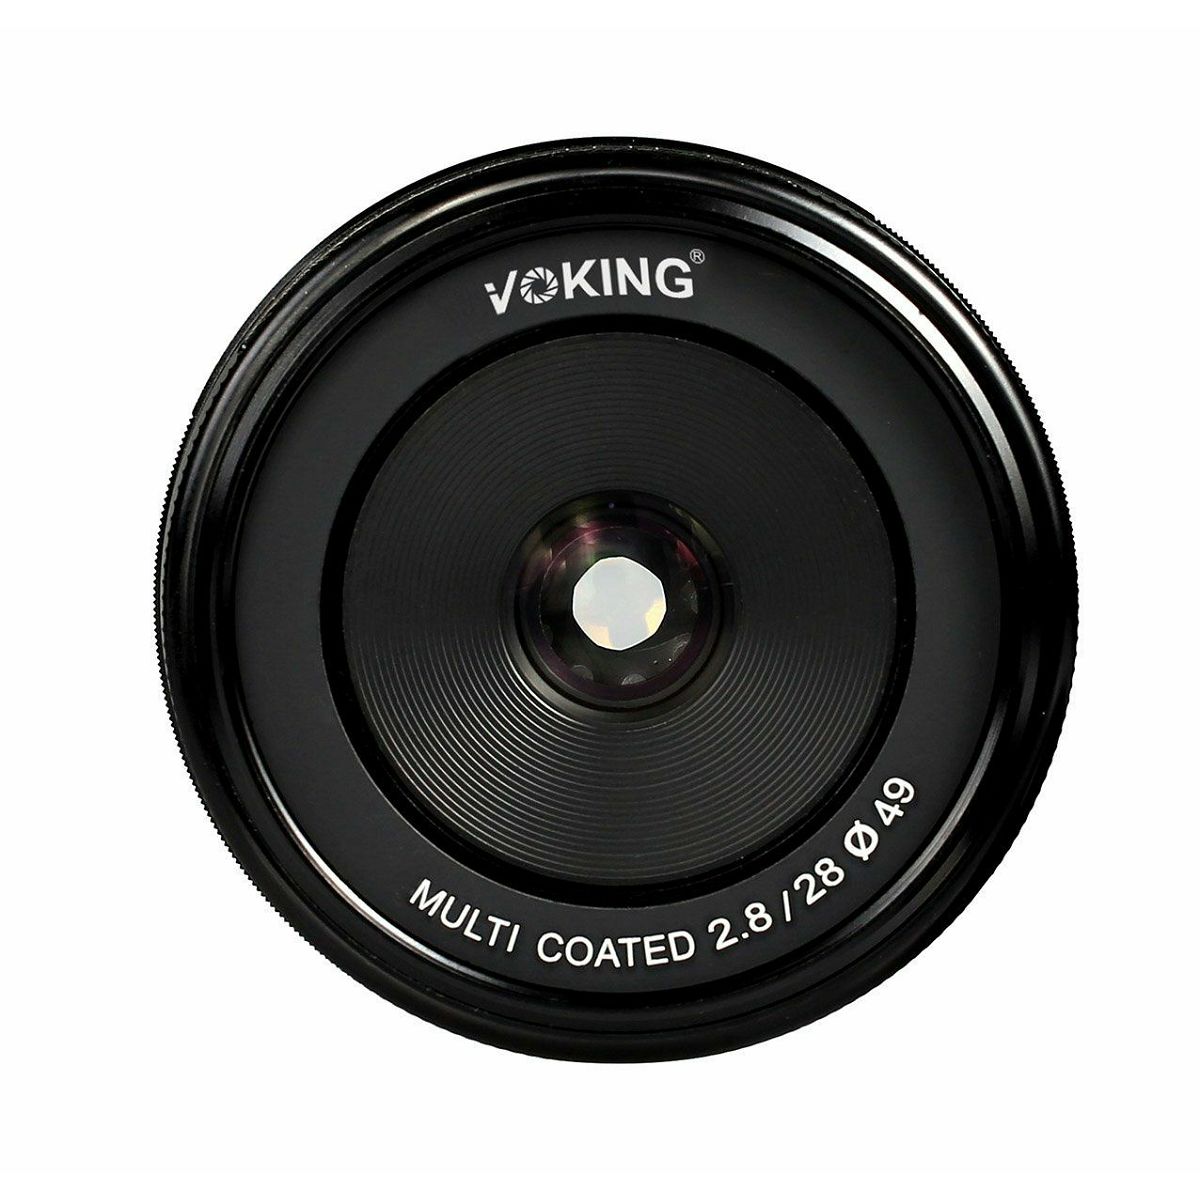 Voking 28mm F2.8 širokokutni objektiv za Canon EOS M (VK28-2.8-C)